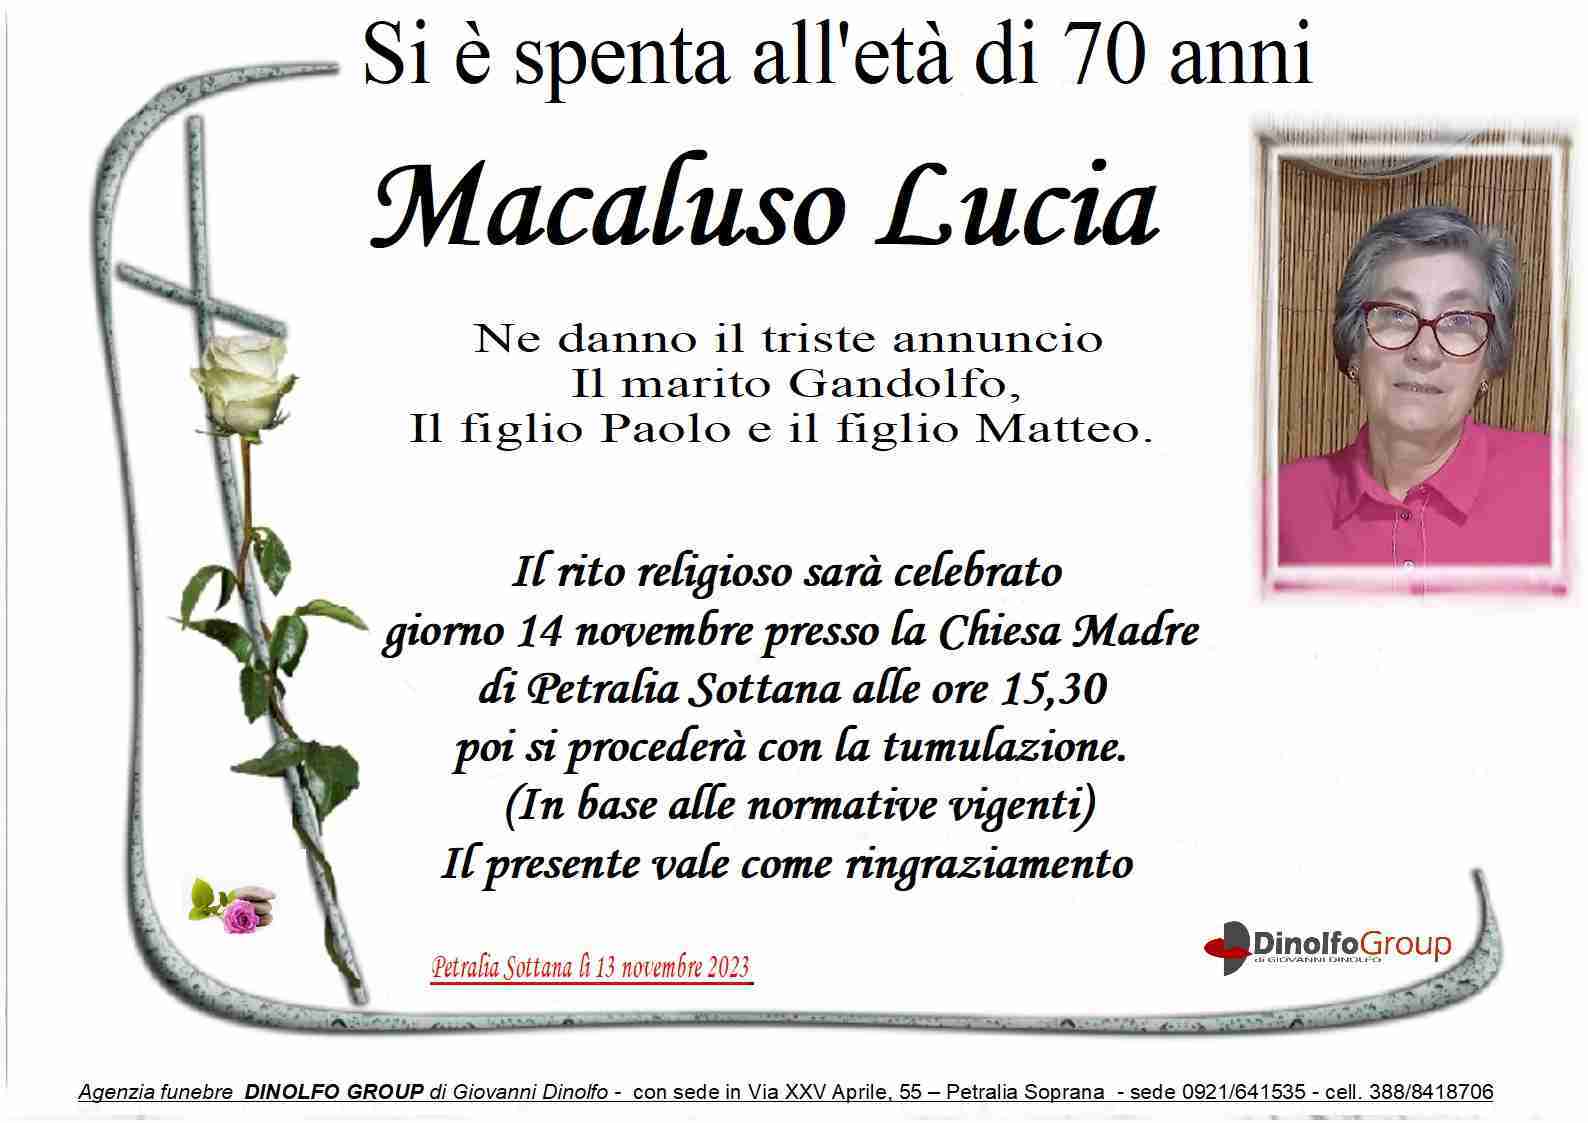 Lucia Macaluso